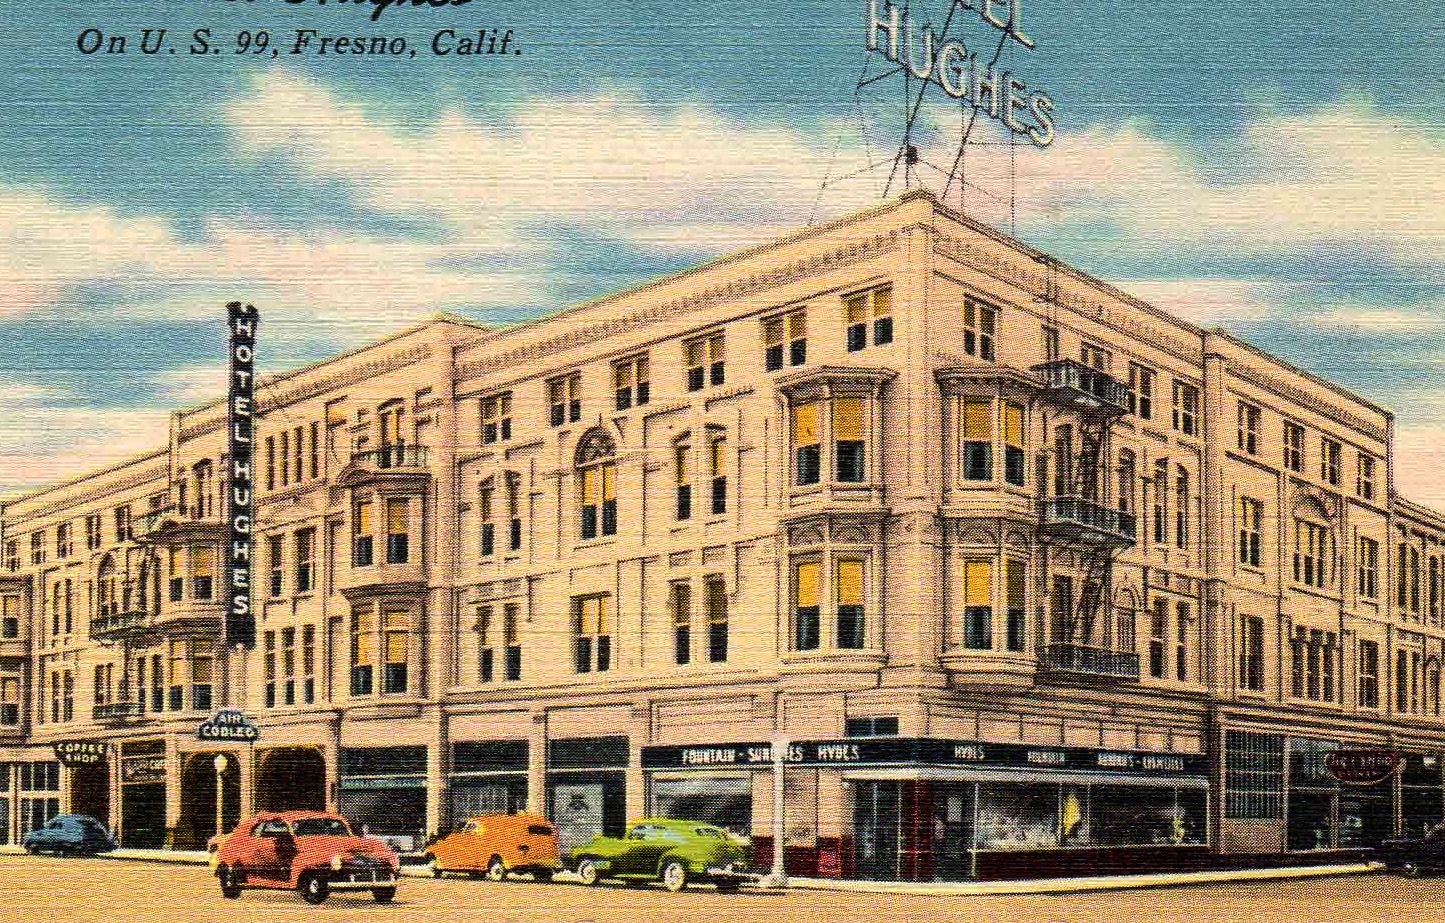 Thomas E Hughes Hotel - Fresno, CA circa 1930